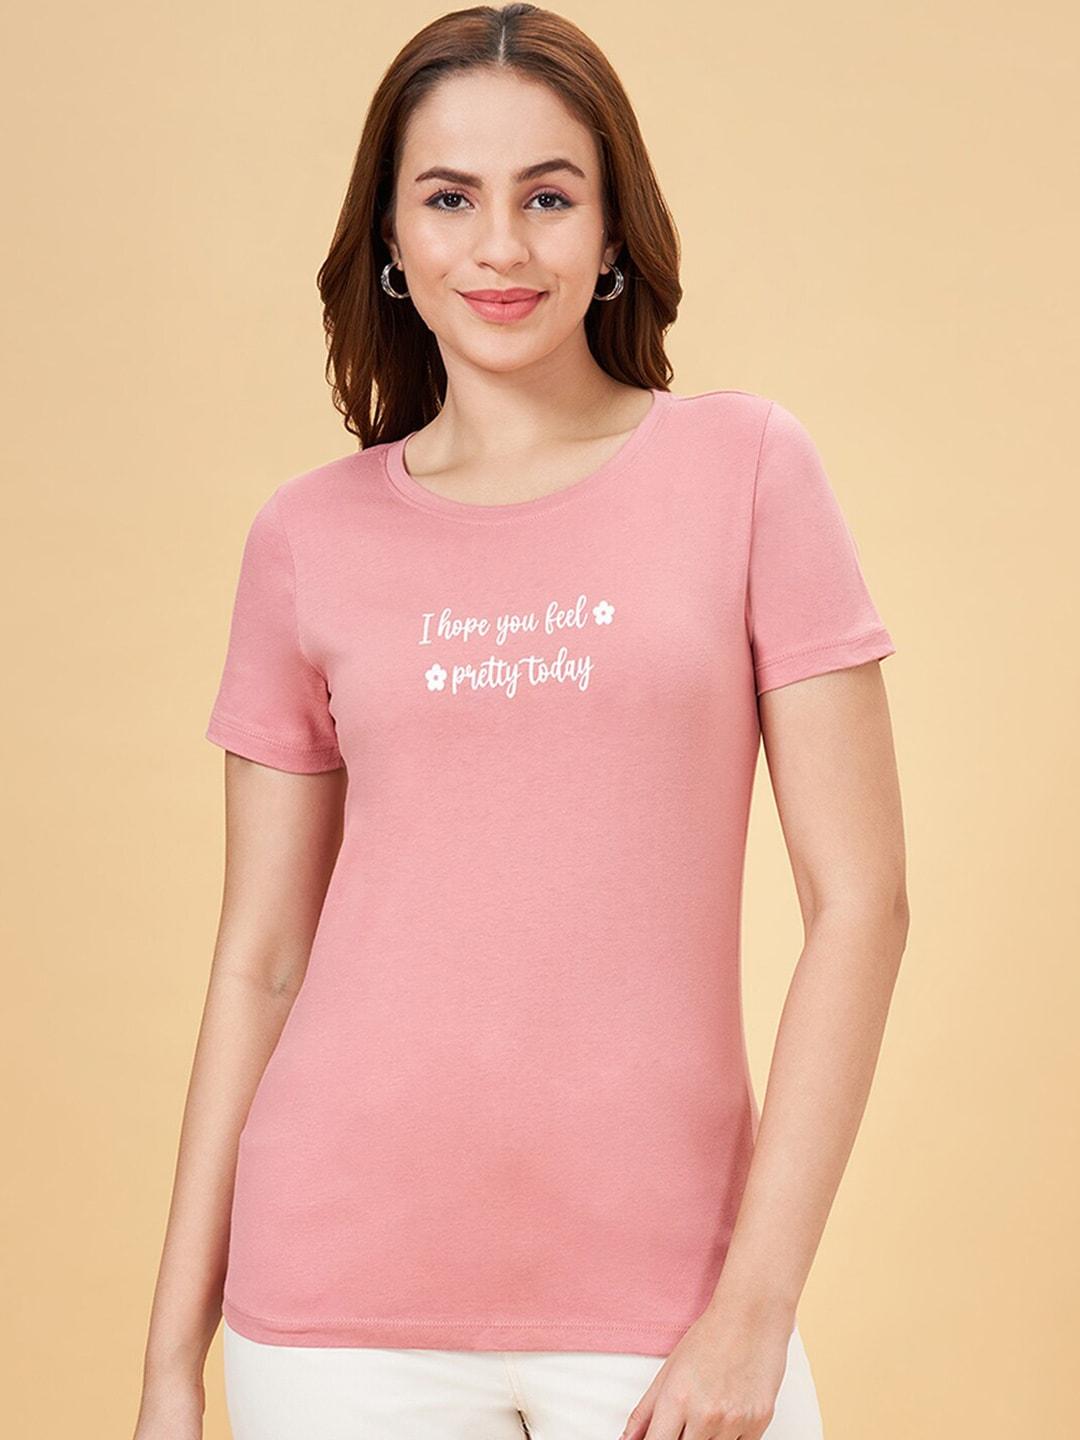 honey by pantaloons women typography t-shirt